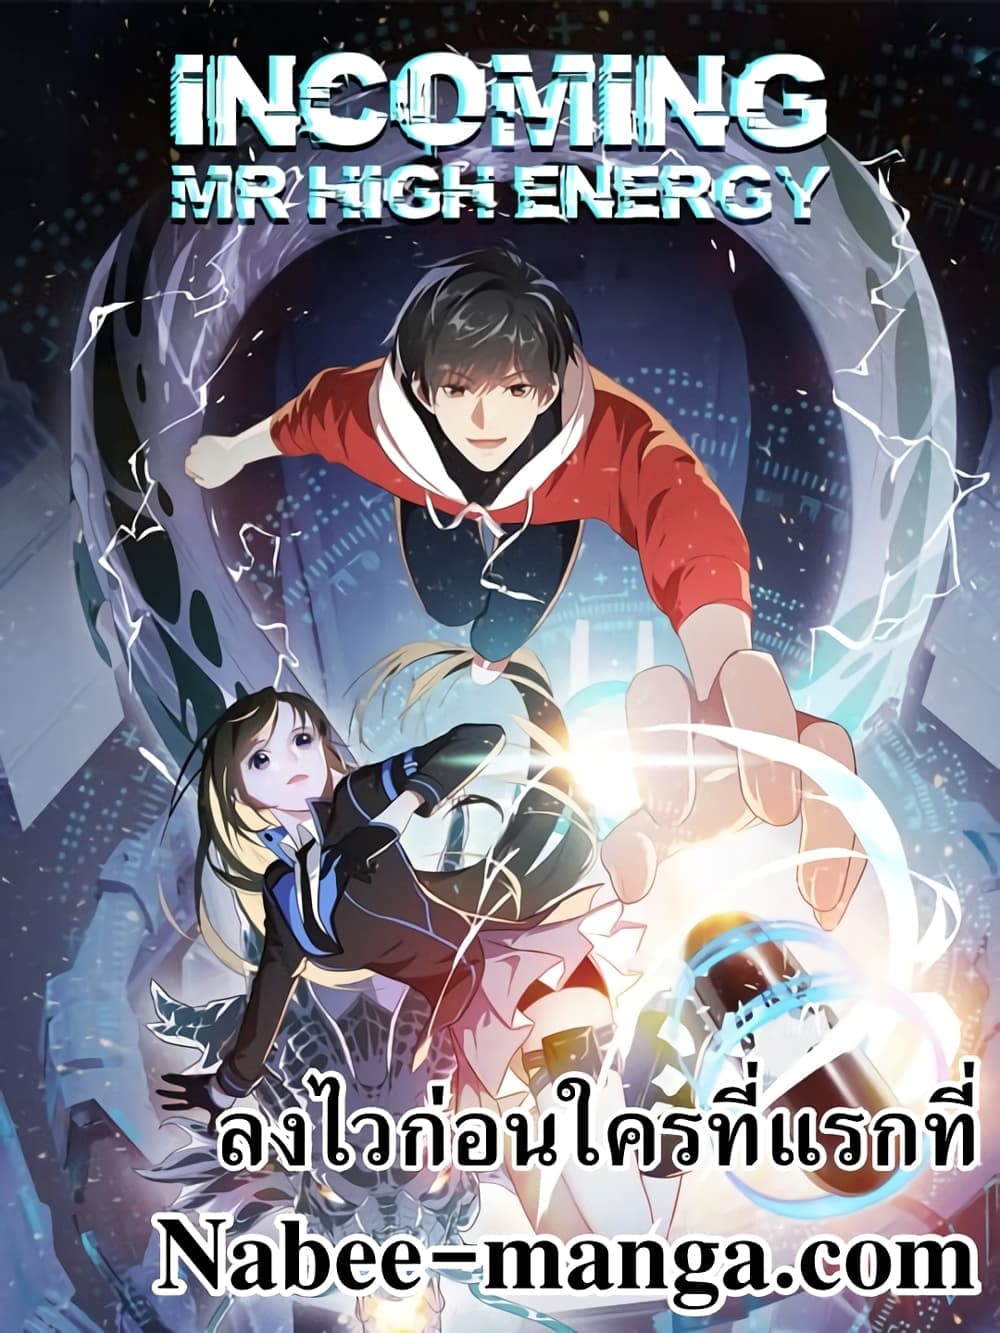 High Energy Strikes à¸à¸­à¸à¸à¸µà¹ 235 (1)